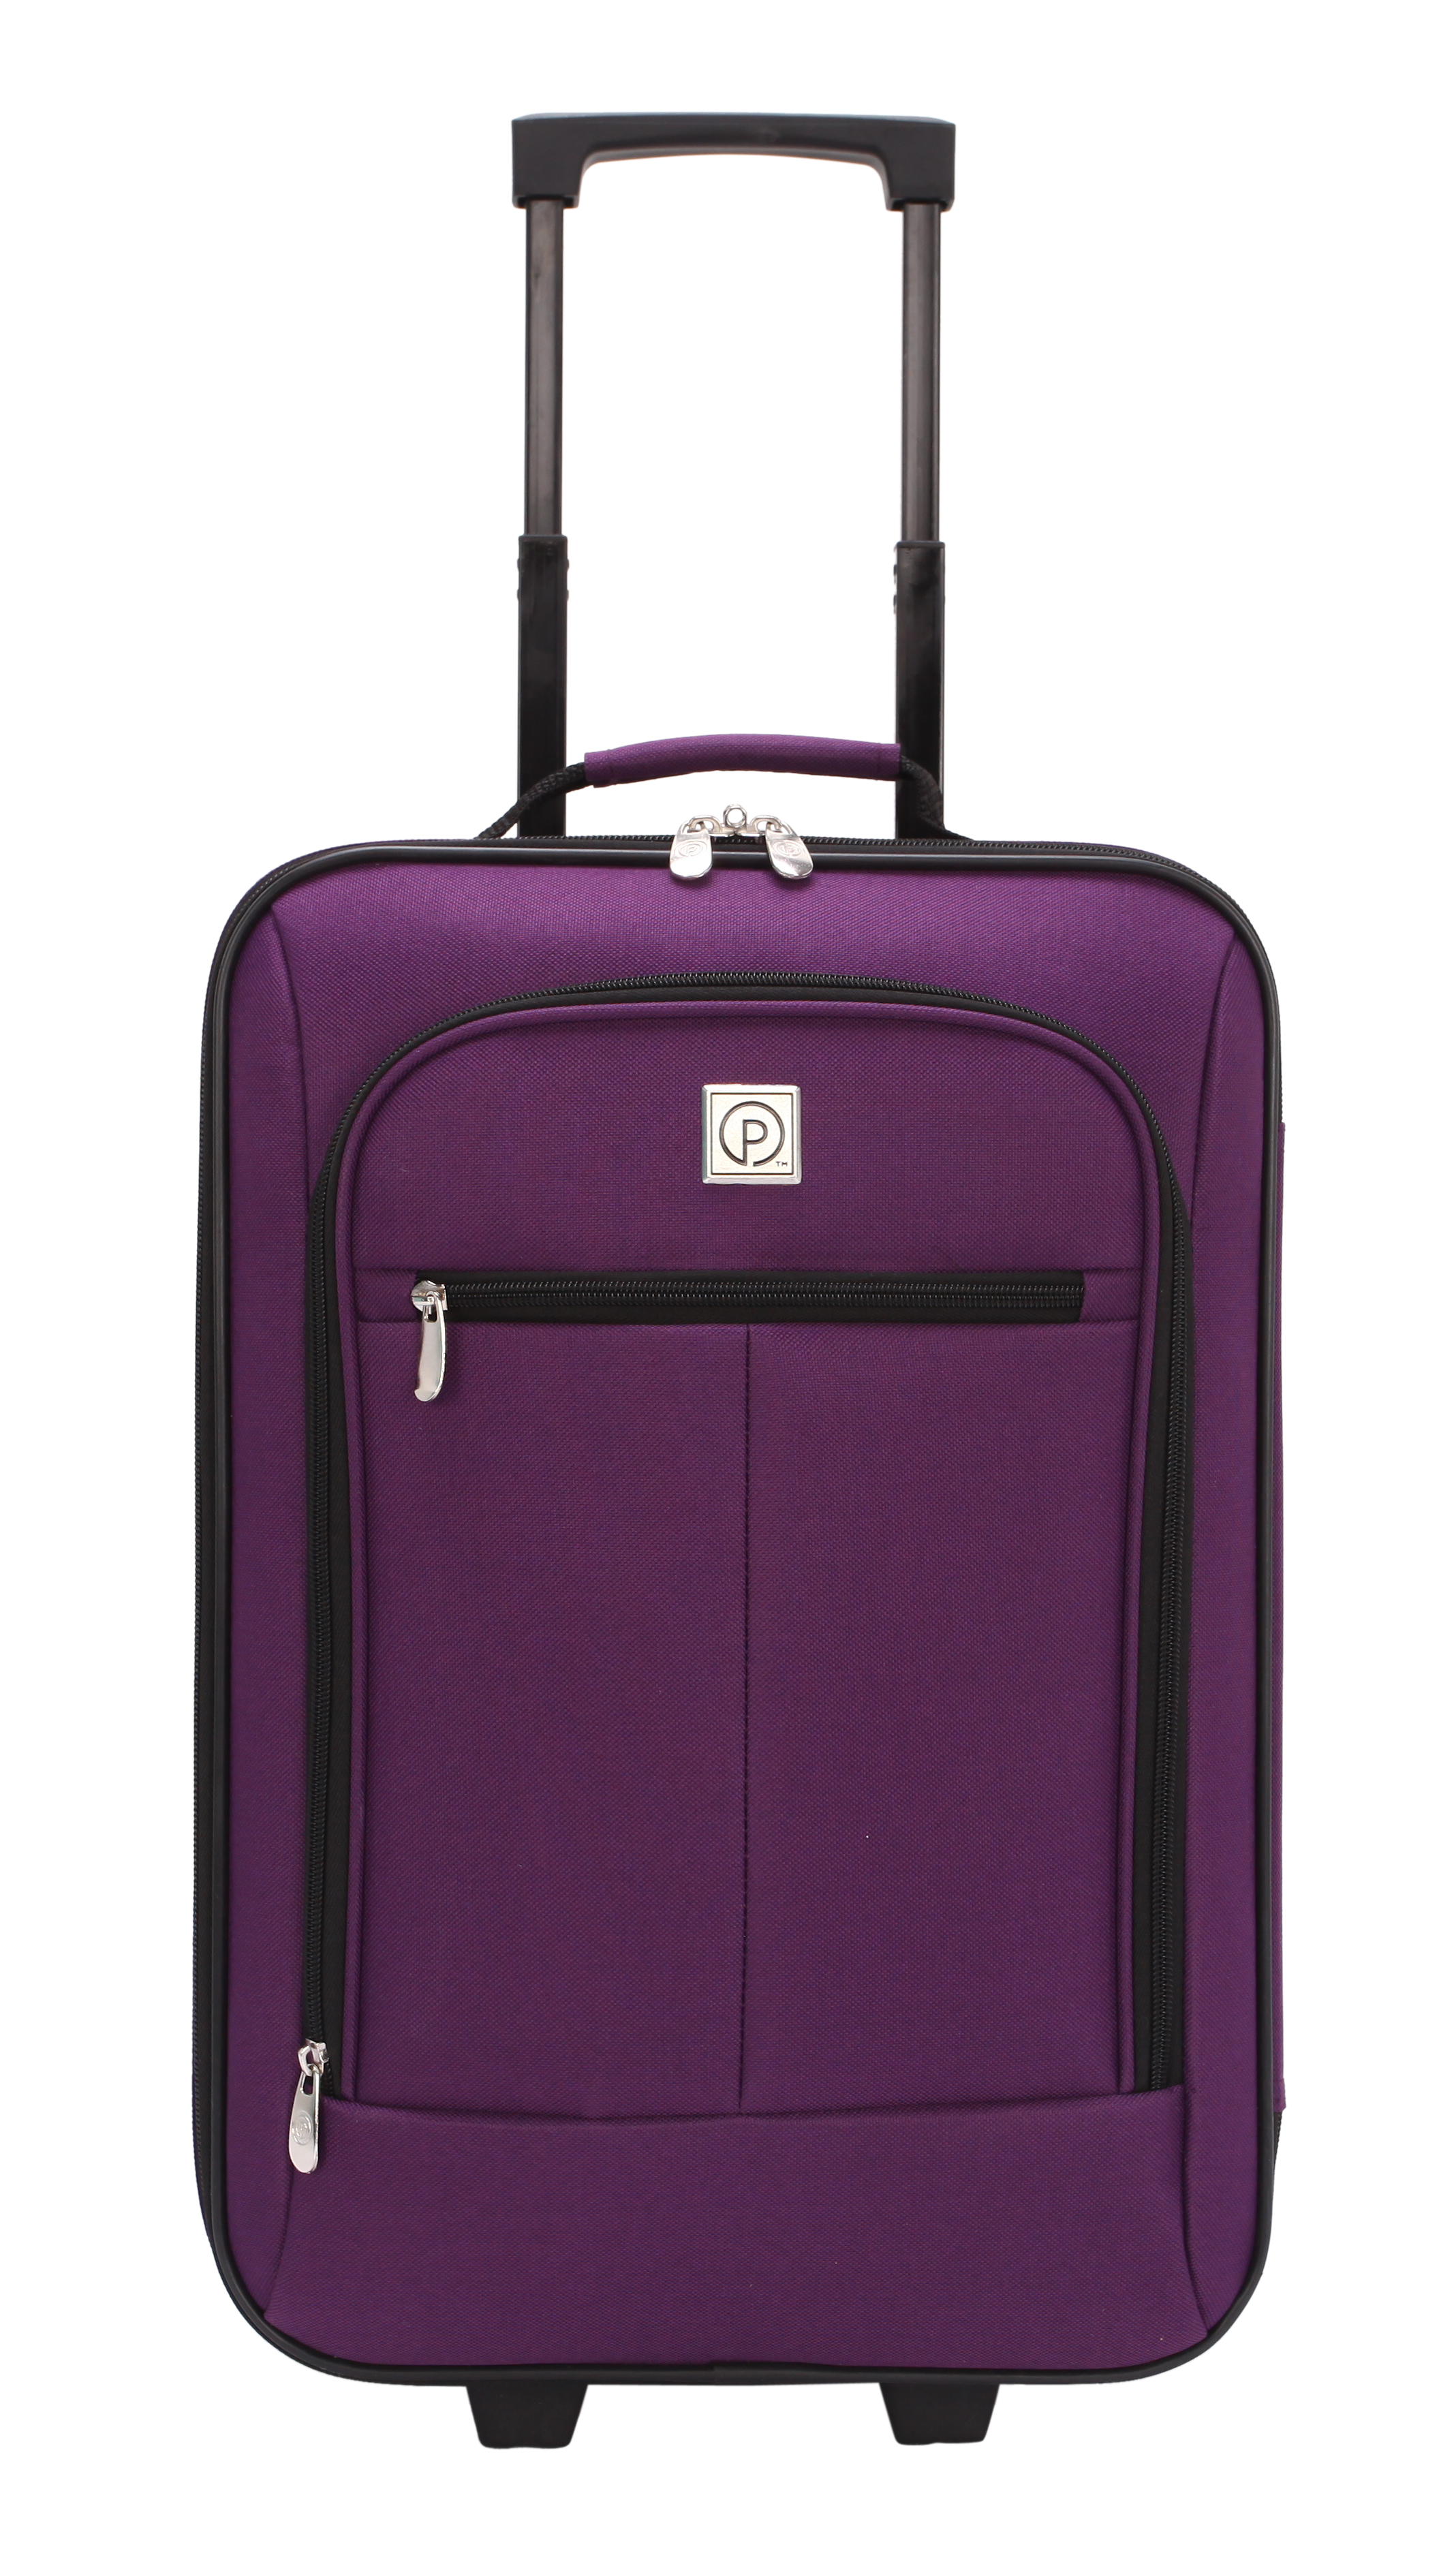 Protege Pilot Case 18" Carry-on Luggage, Purple, 12.5"L x 6.5"D x 19.25"H - image 1 of 7